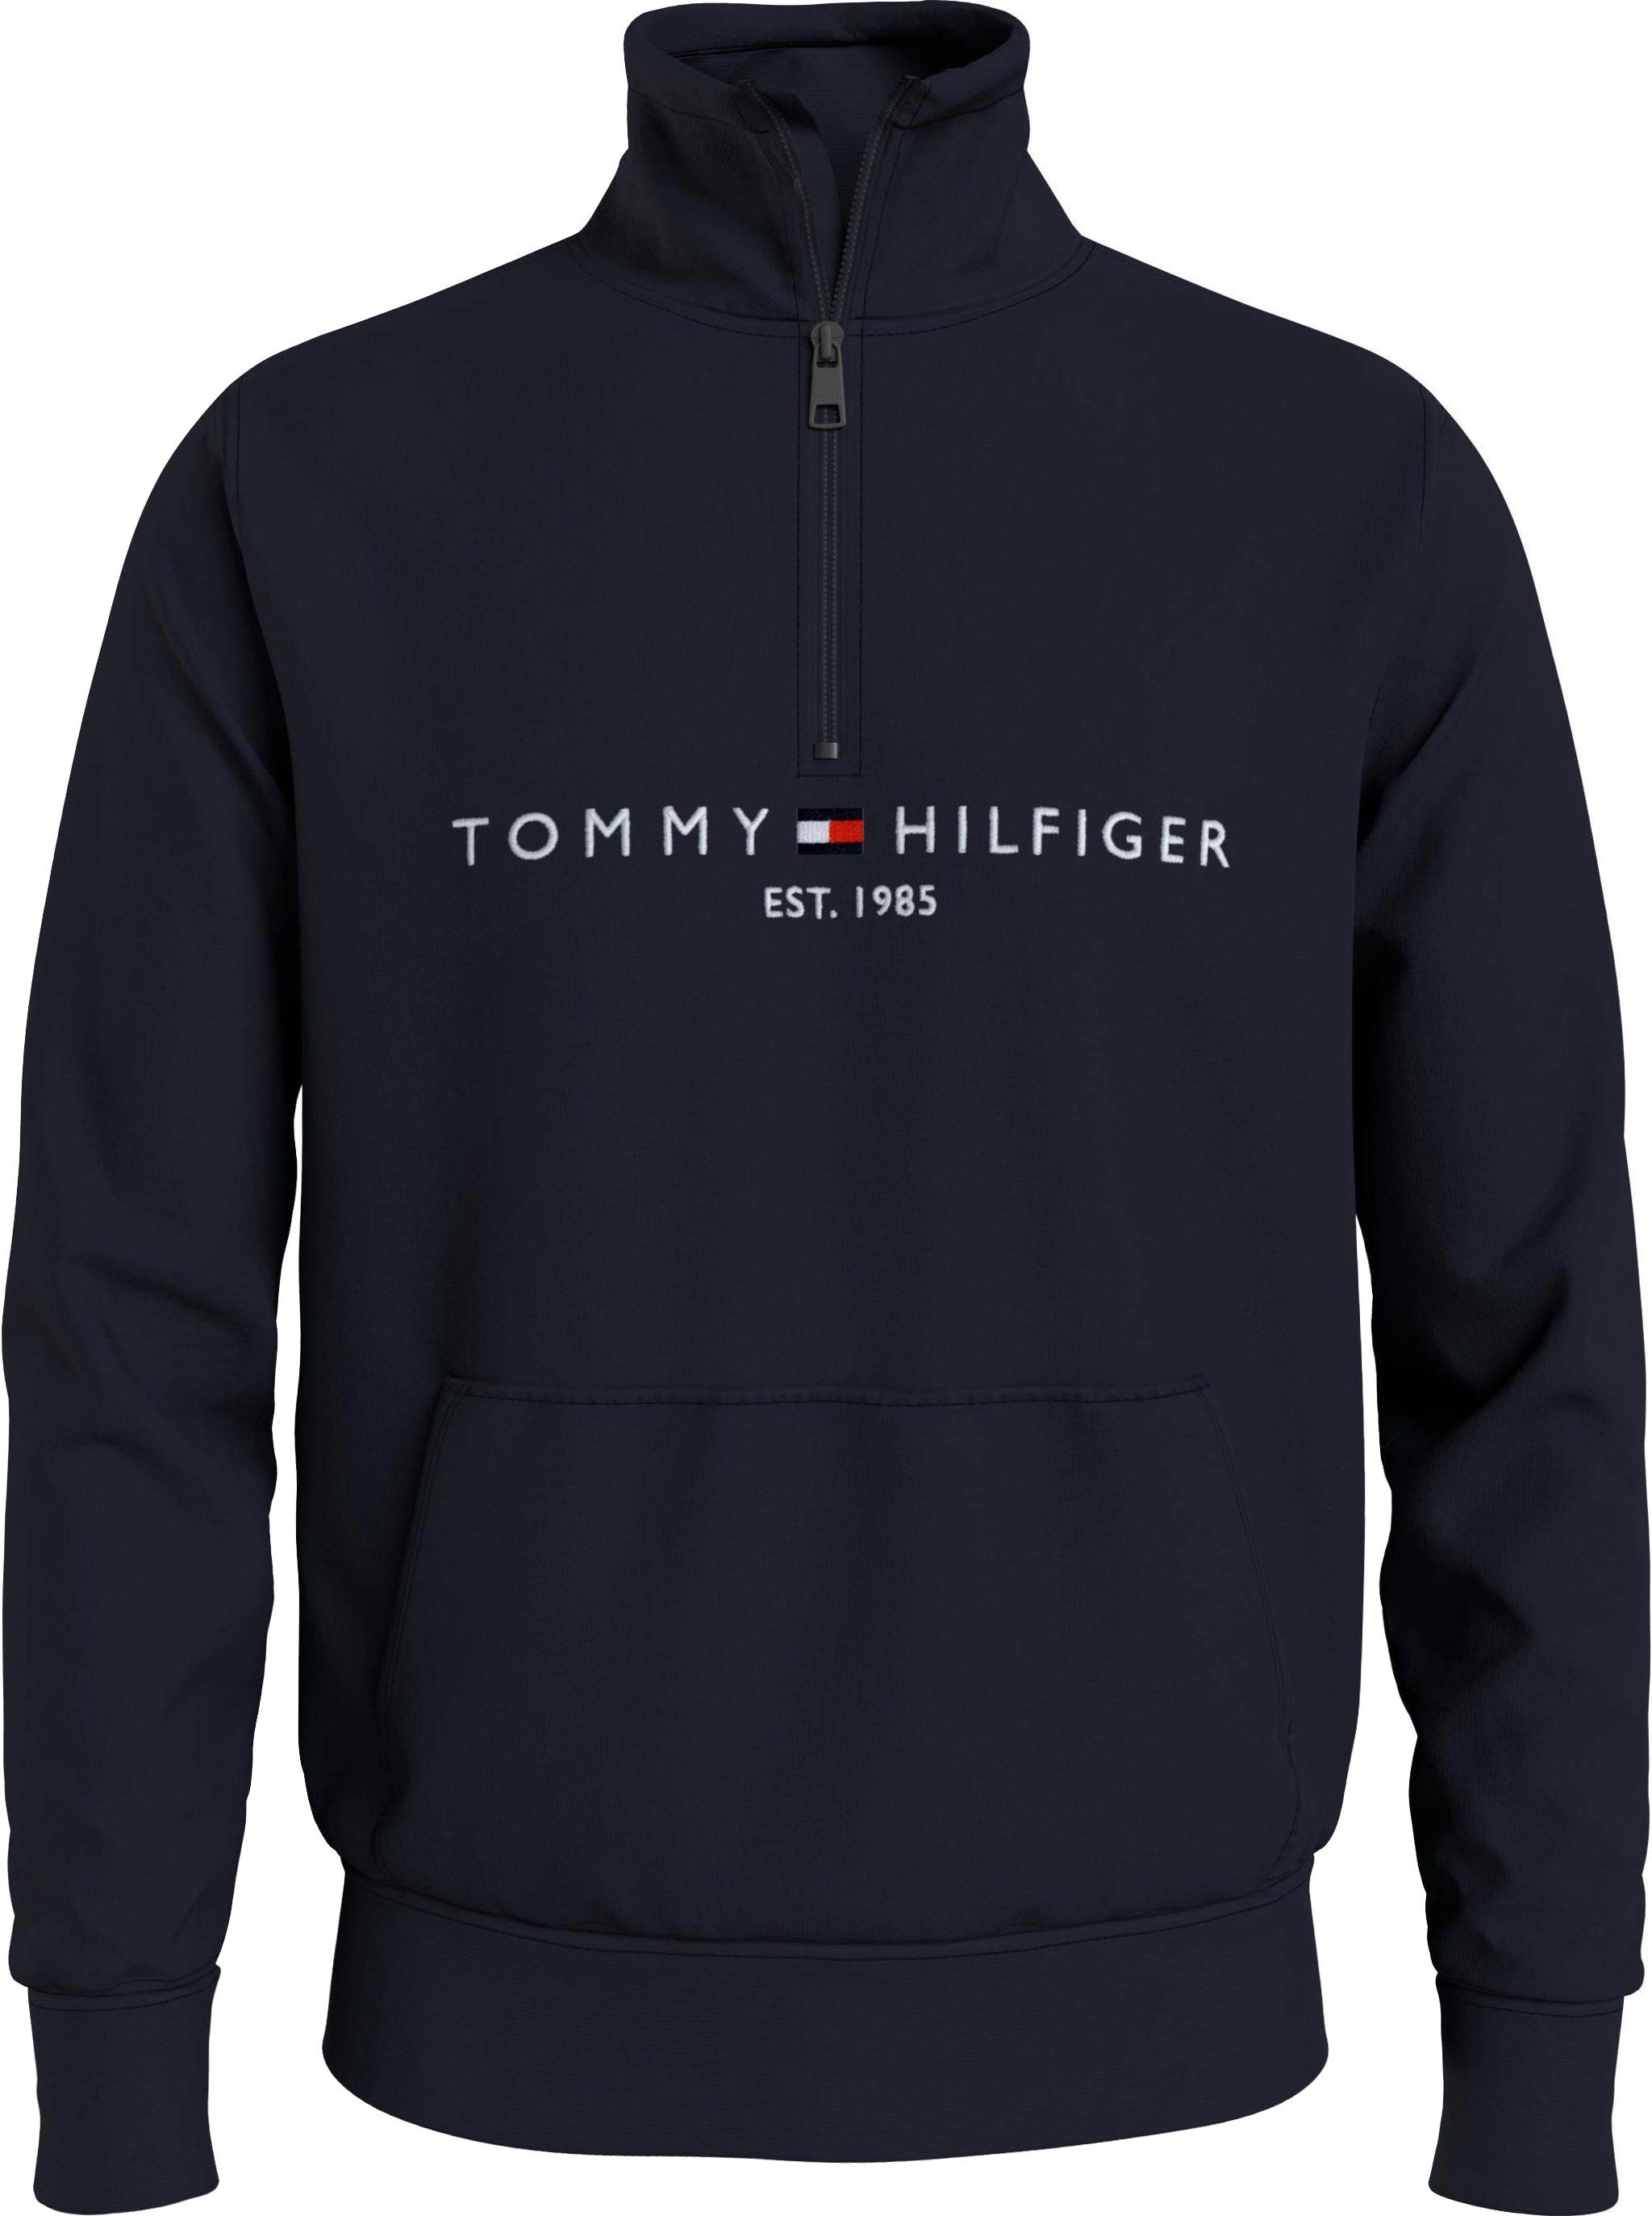 Tommy Hilfiger Big and Tall Mockneck Navy Dark Blue size 3XL